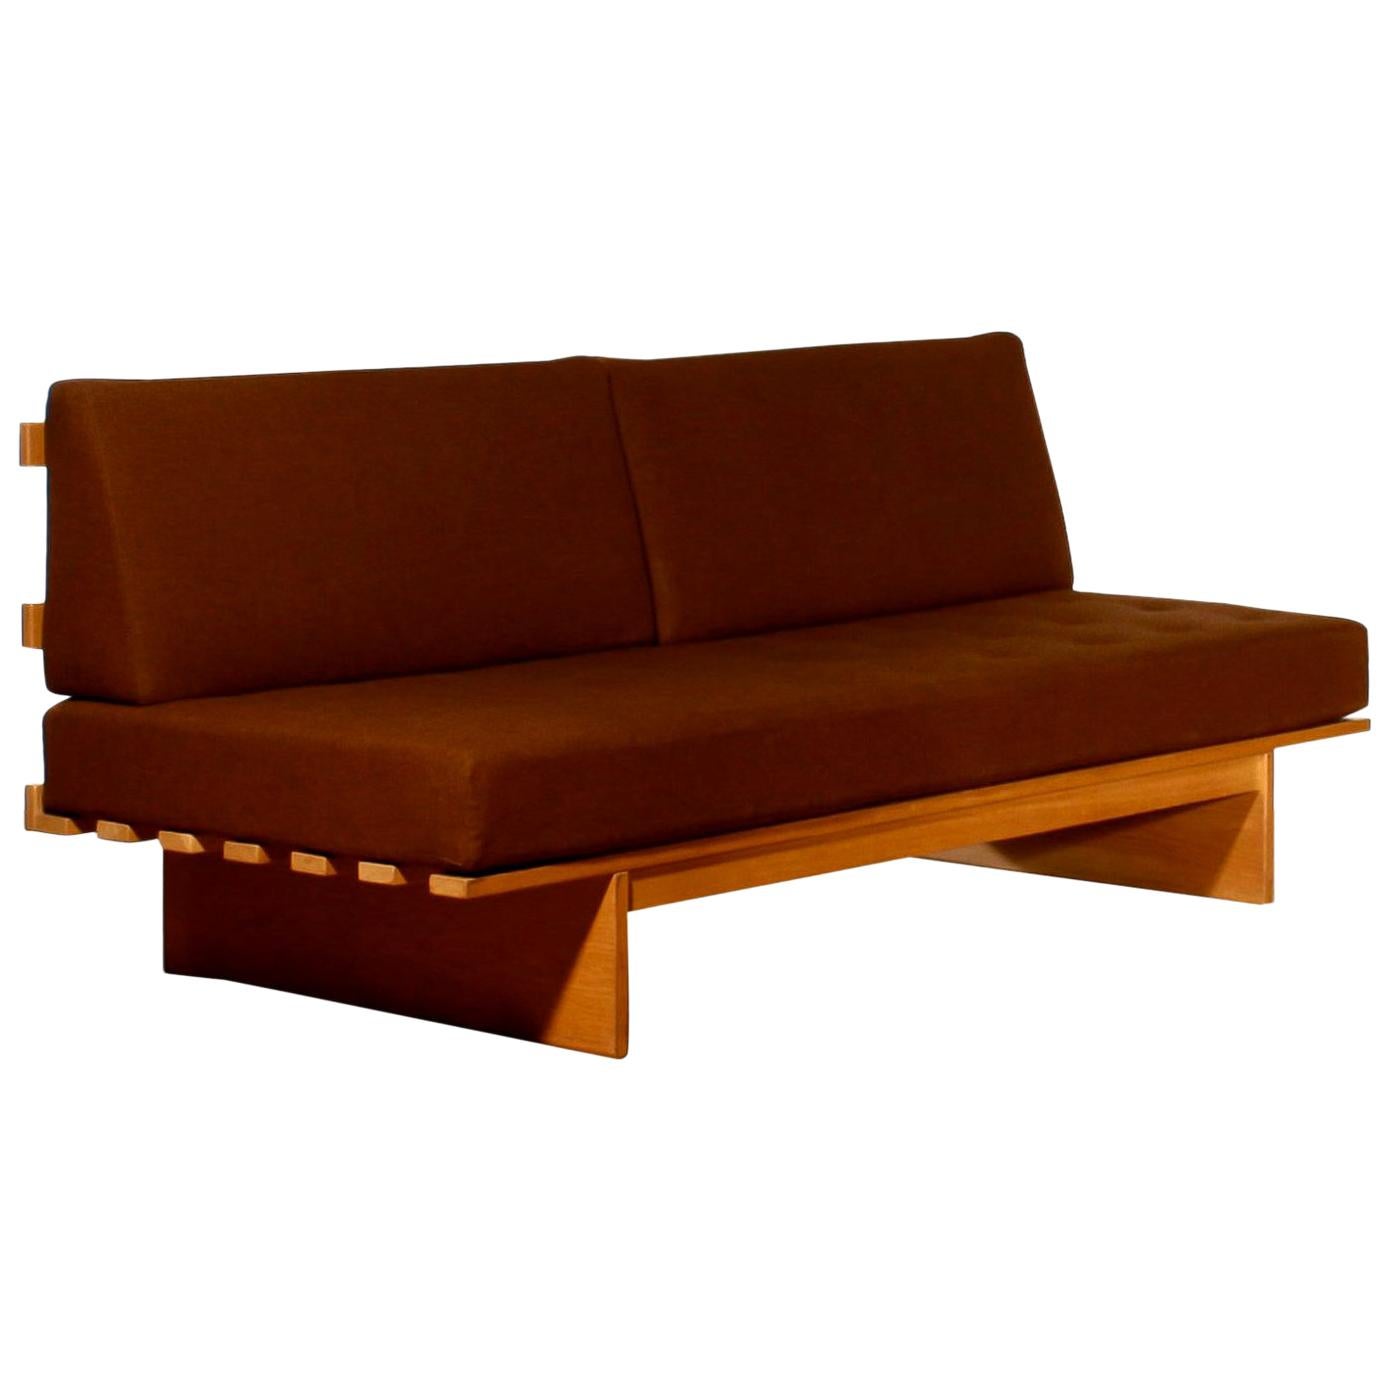 Scandinavian Modern 1970s Oak and Wool Sofa or Sleeper by Bra Bohag for DUX